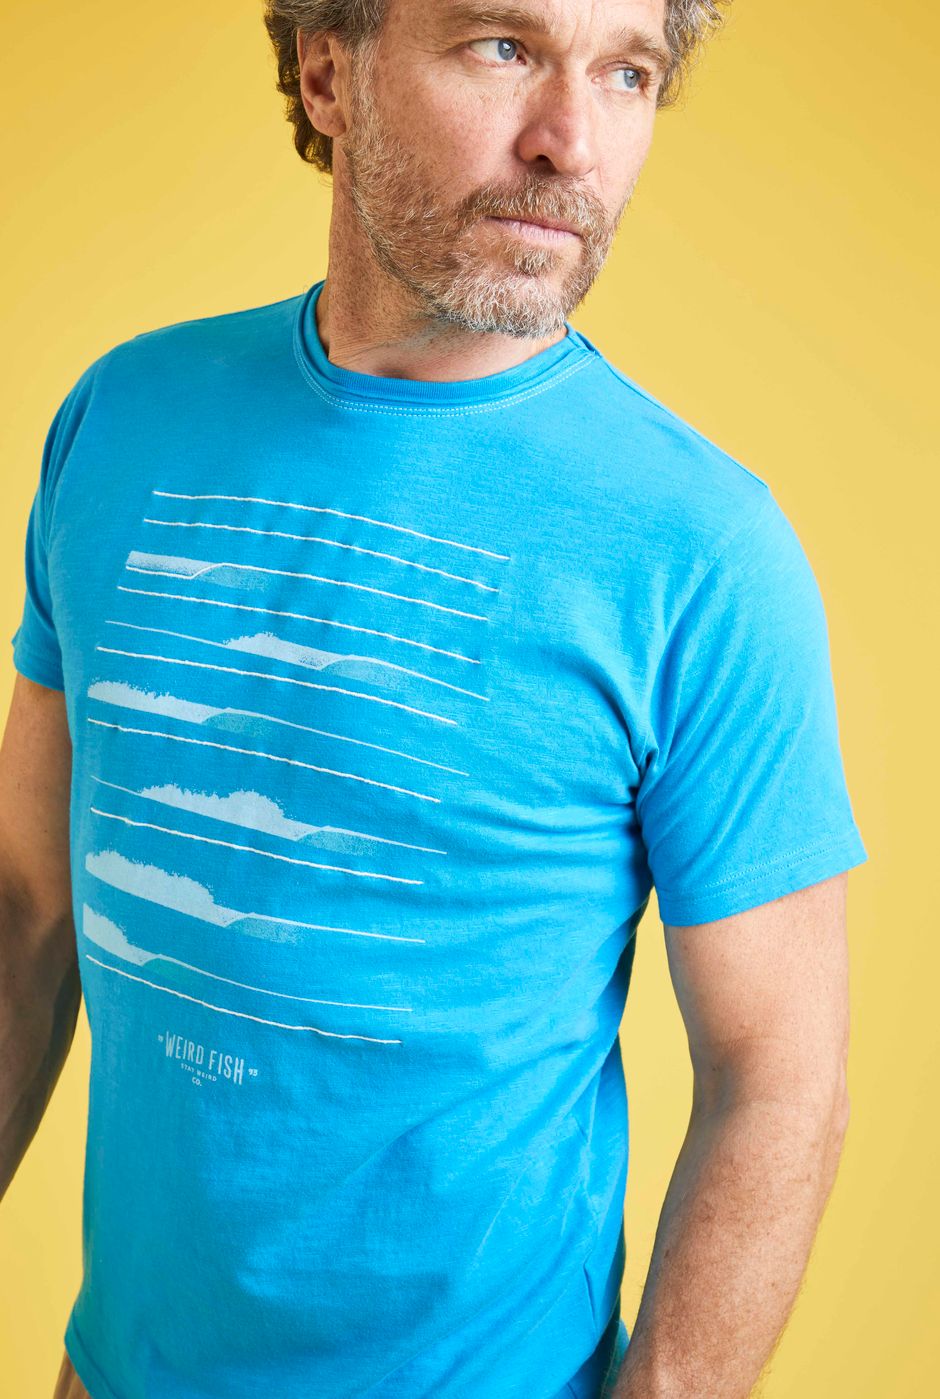 Breakers Organic Cotton Slub Graphic T-Shirt Azure